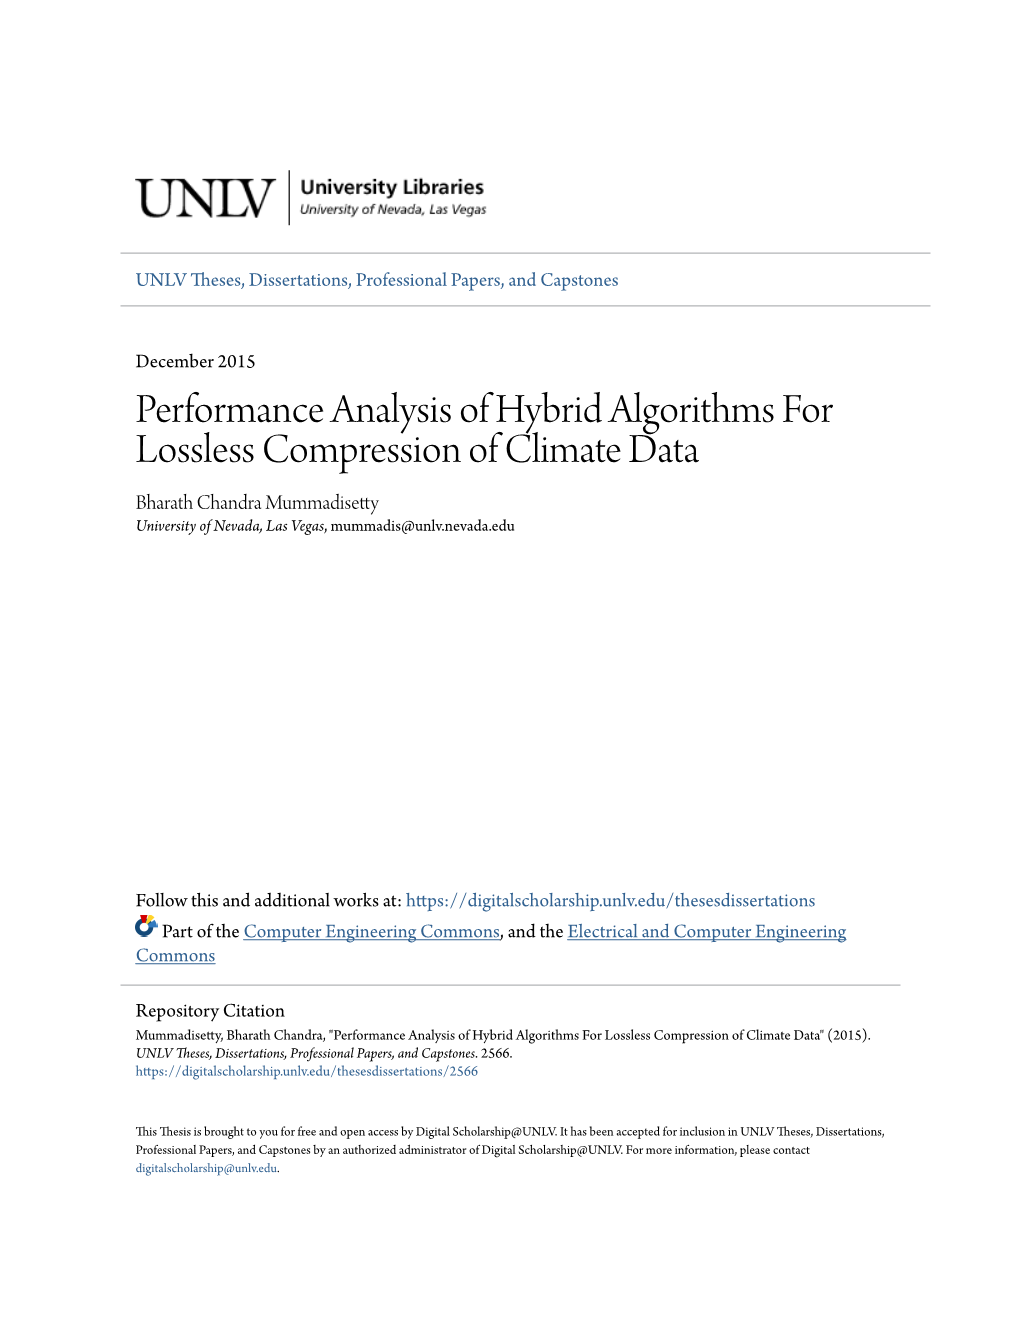 Performance Analysis of Hybrid Algorithms for Lossless